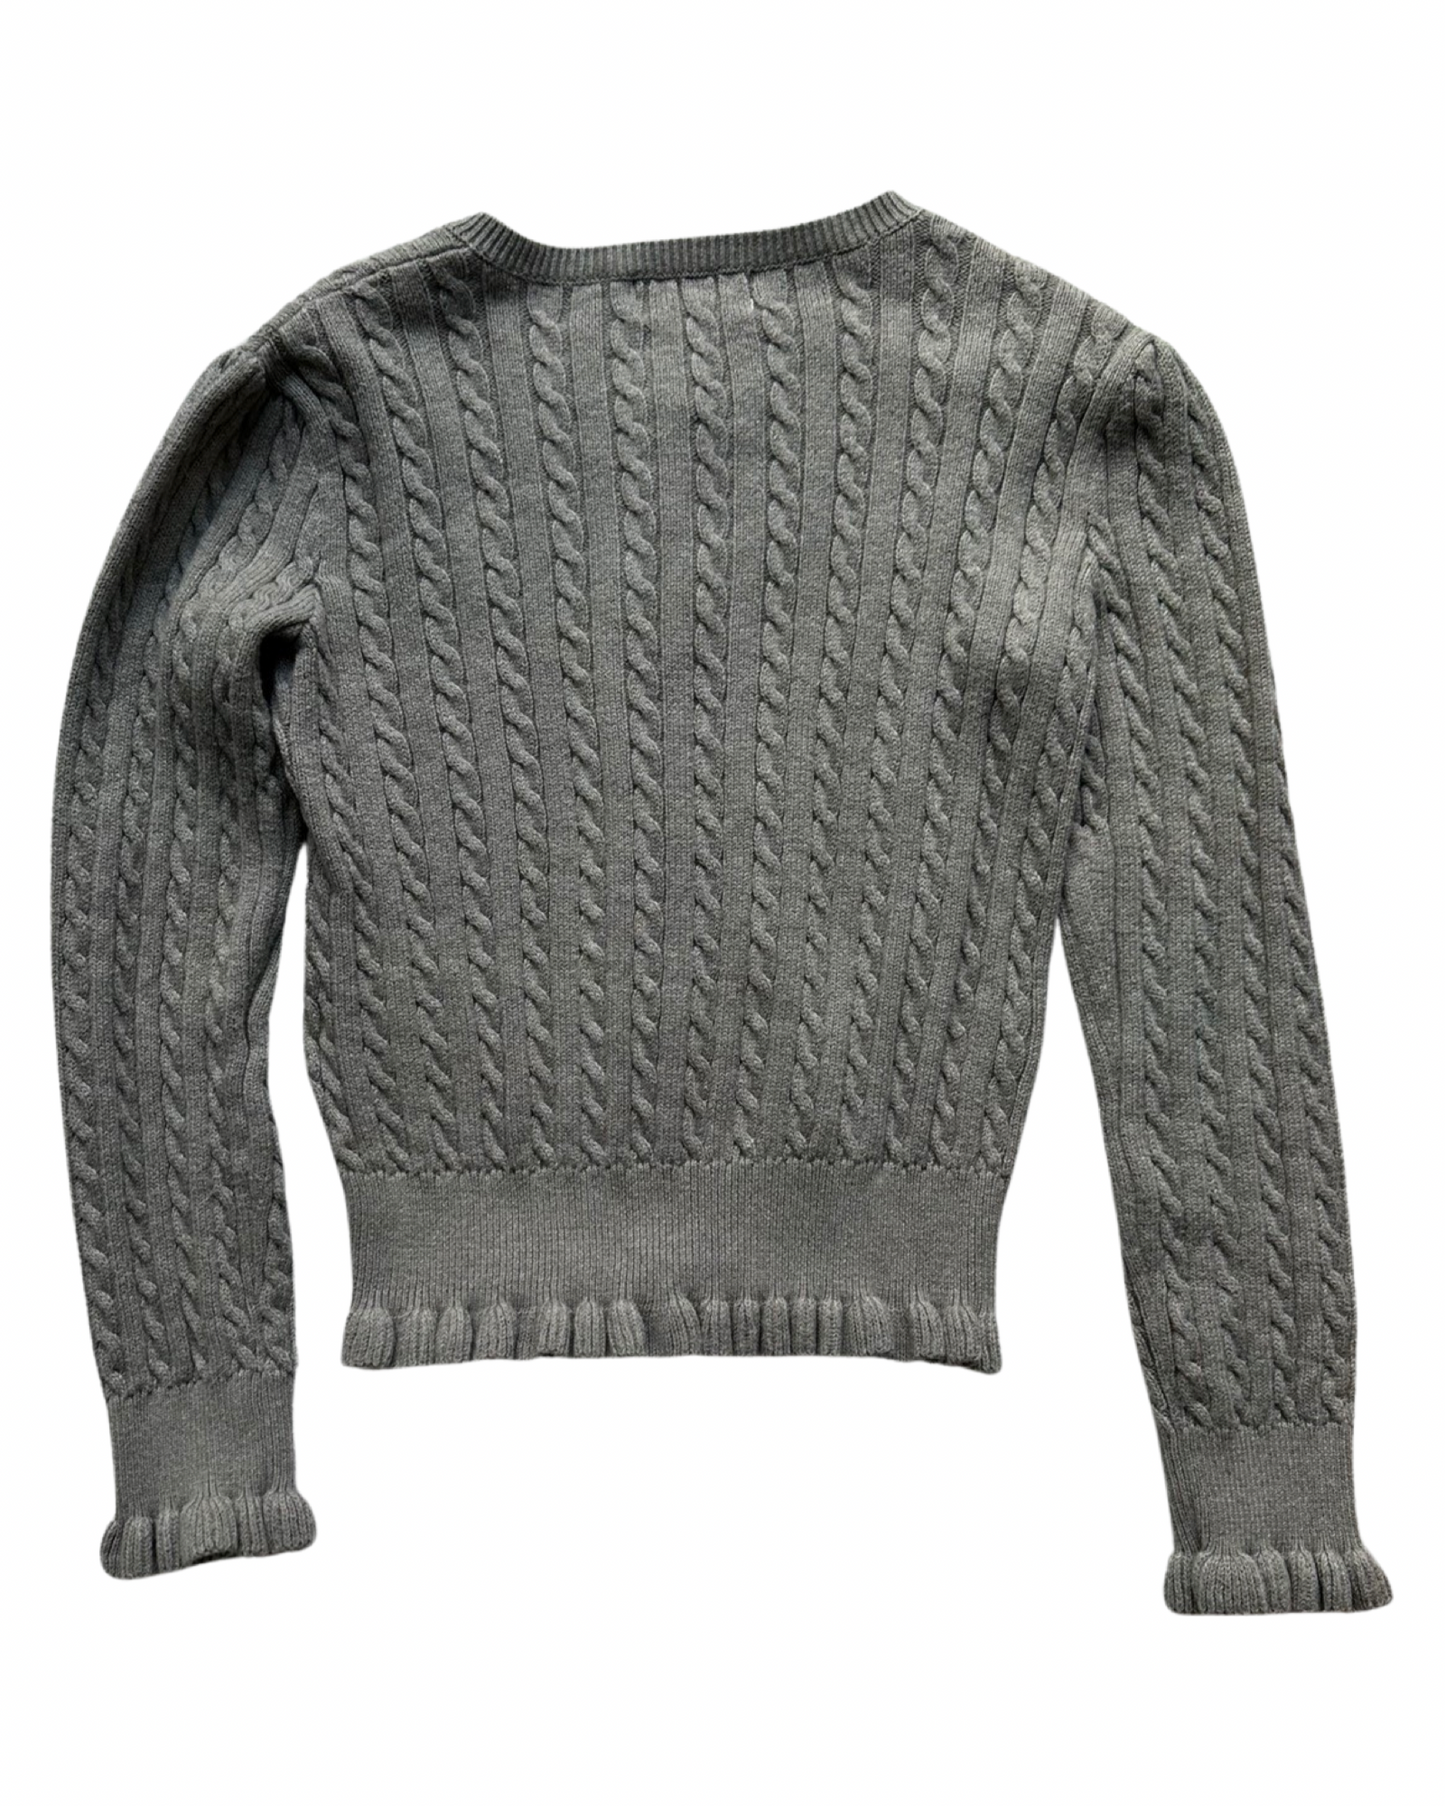 Ralph Lauren grey cable knit cardigan (5-6yrs)